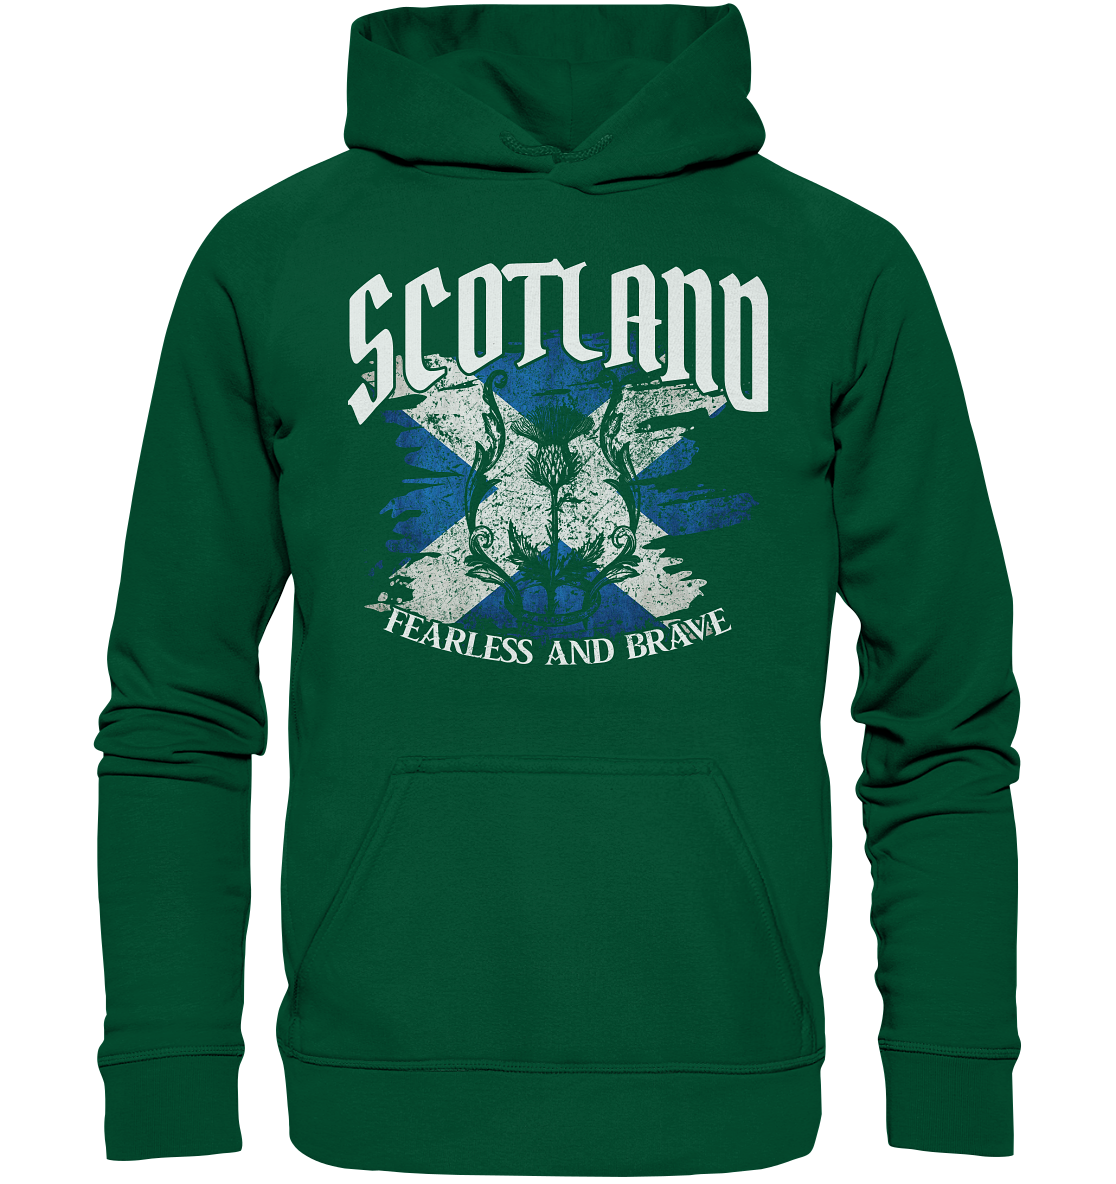 Scotland "Fearless and Brave / Splatter" - Basic Unisex Hoodie